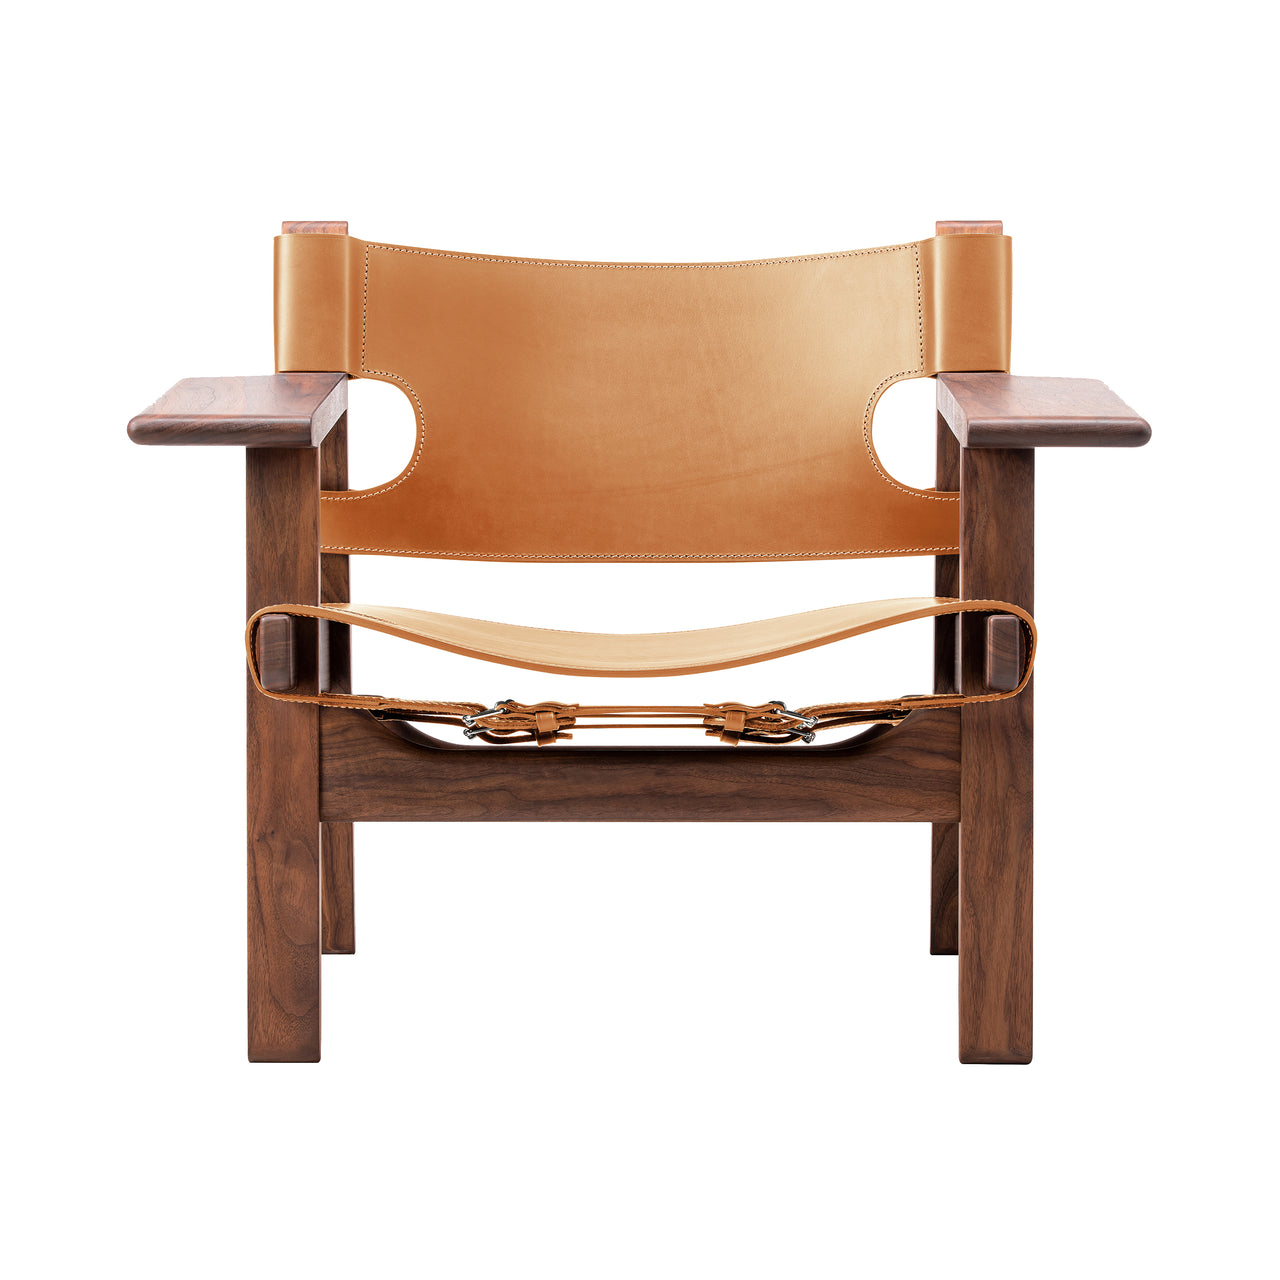 The Spanish Chair: Oiled Walnut + Cognac